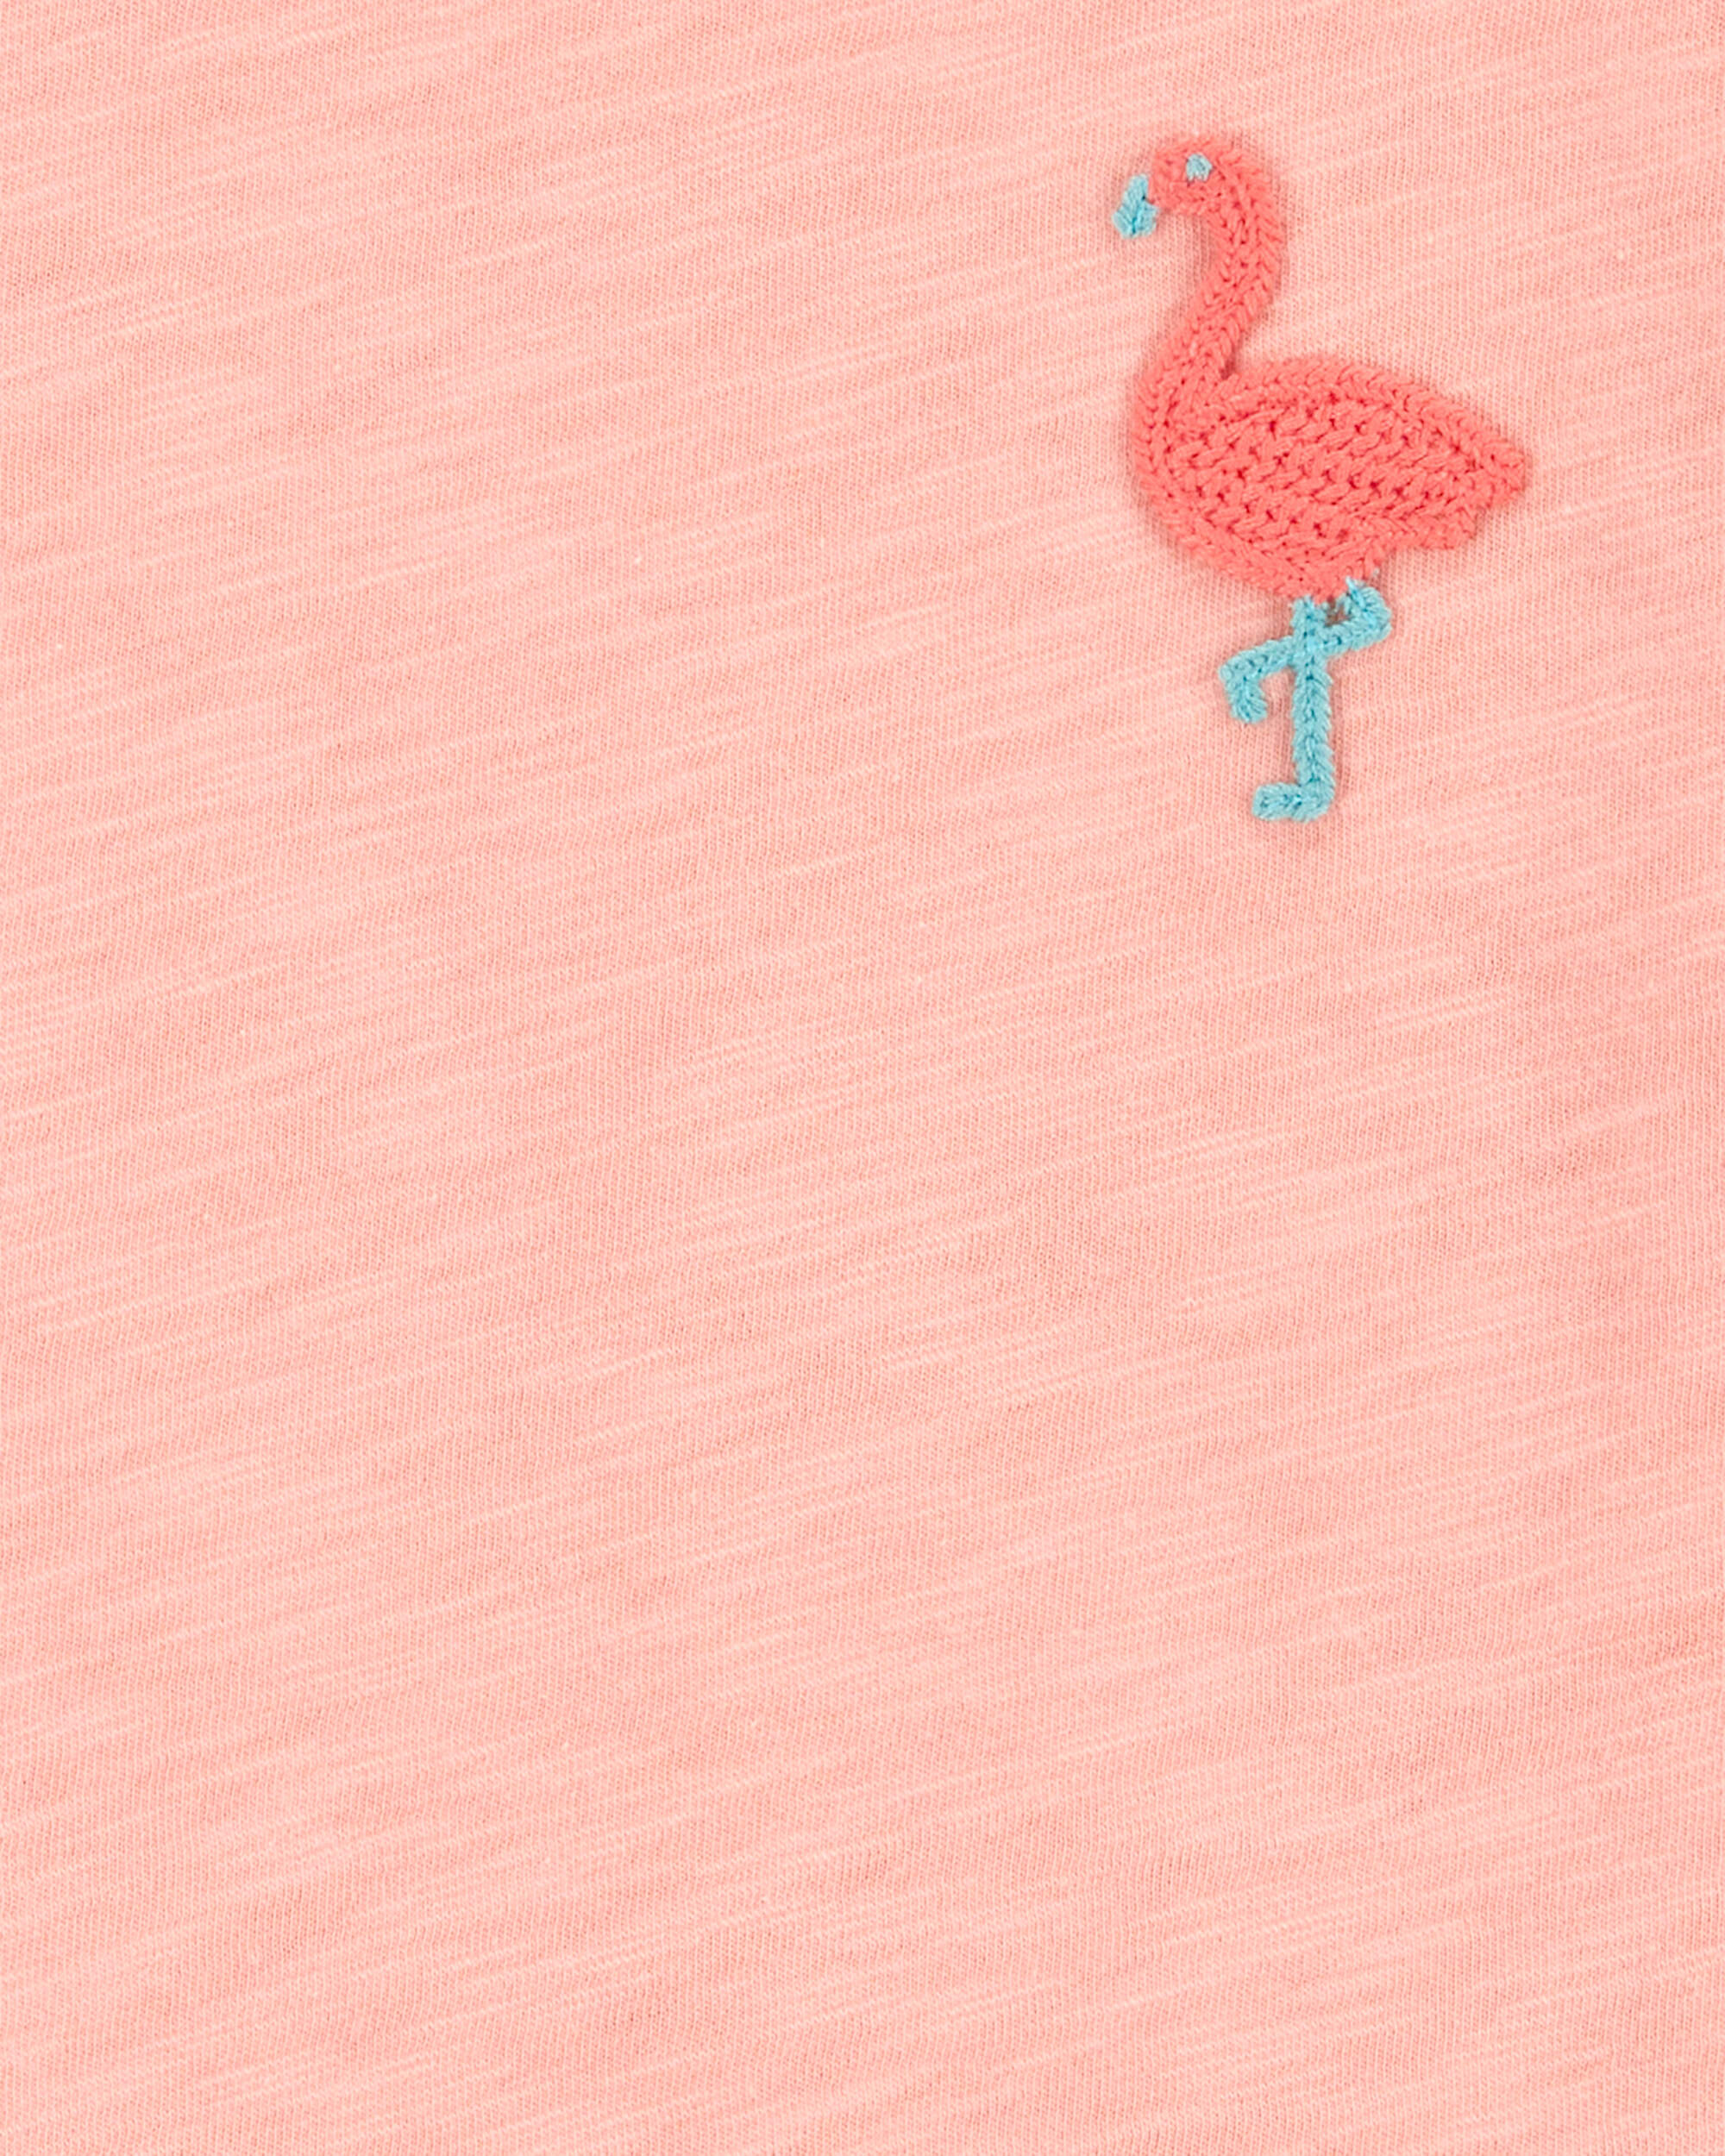 KUKUKID Flamingo Pattern Summer Sleeveless T Shirt For Baby Boys